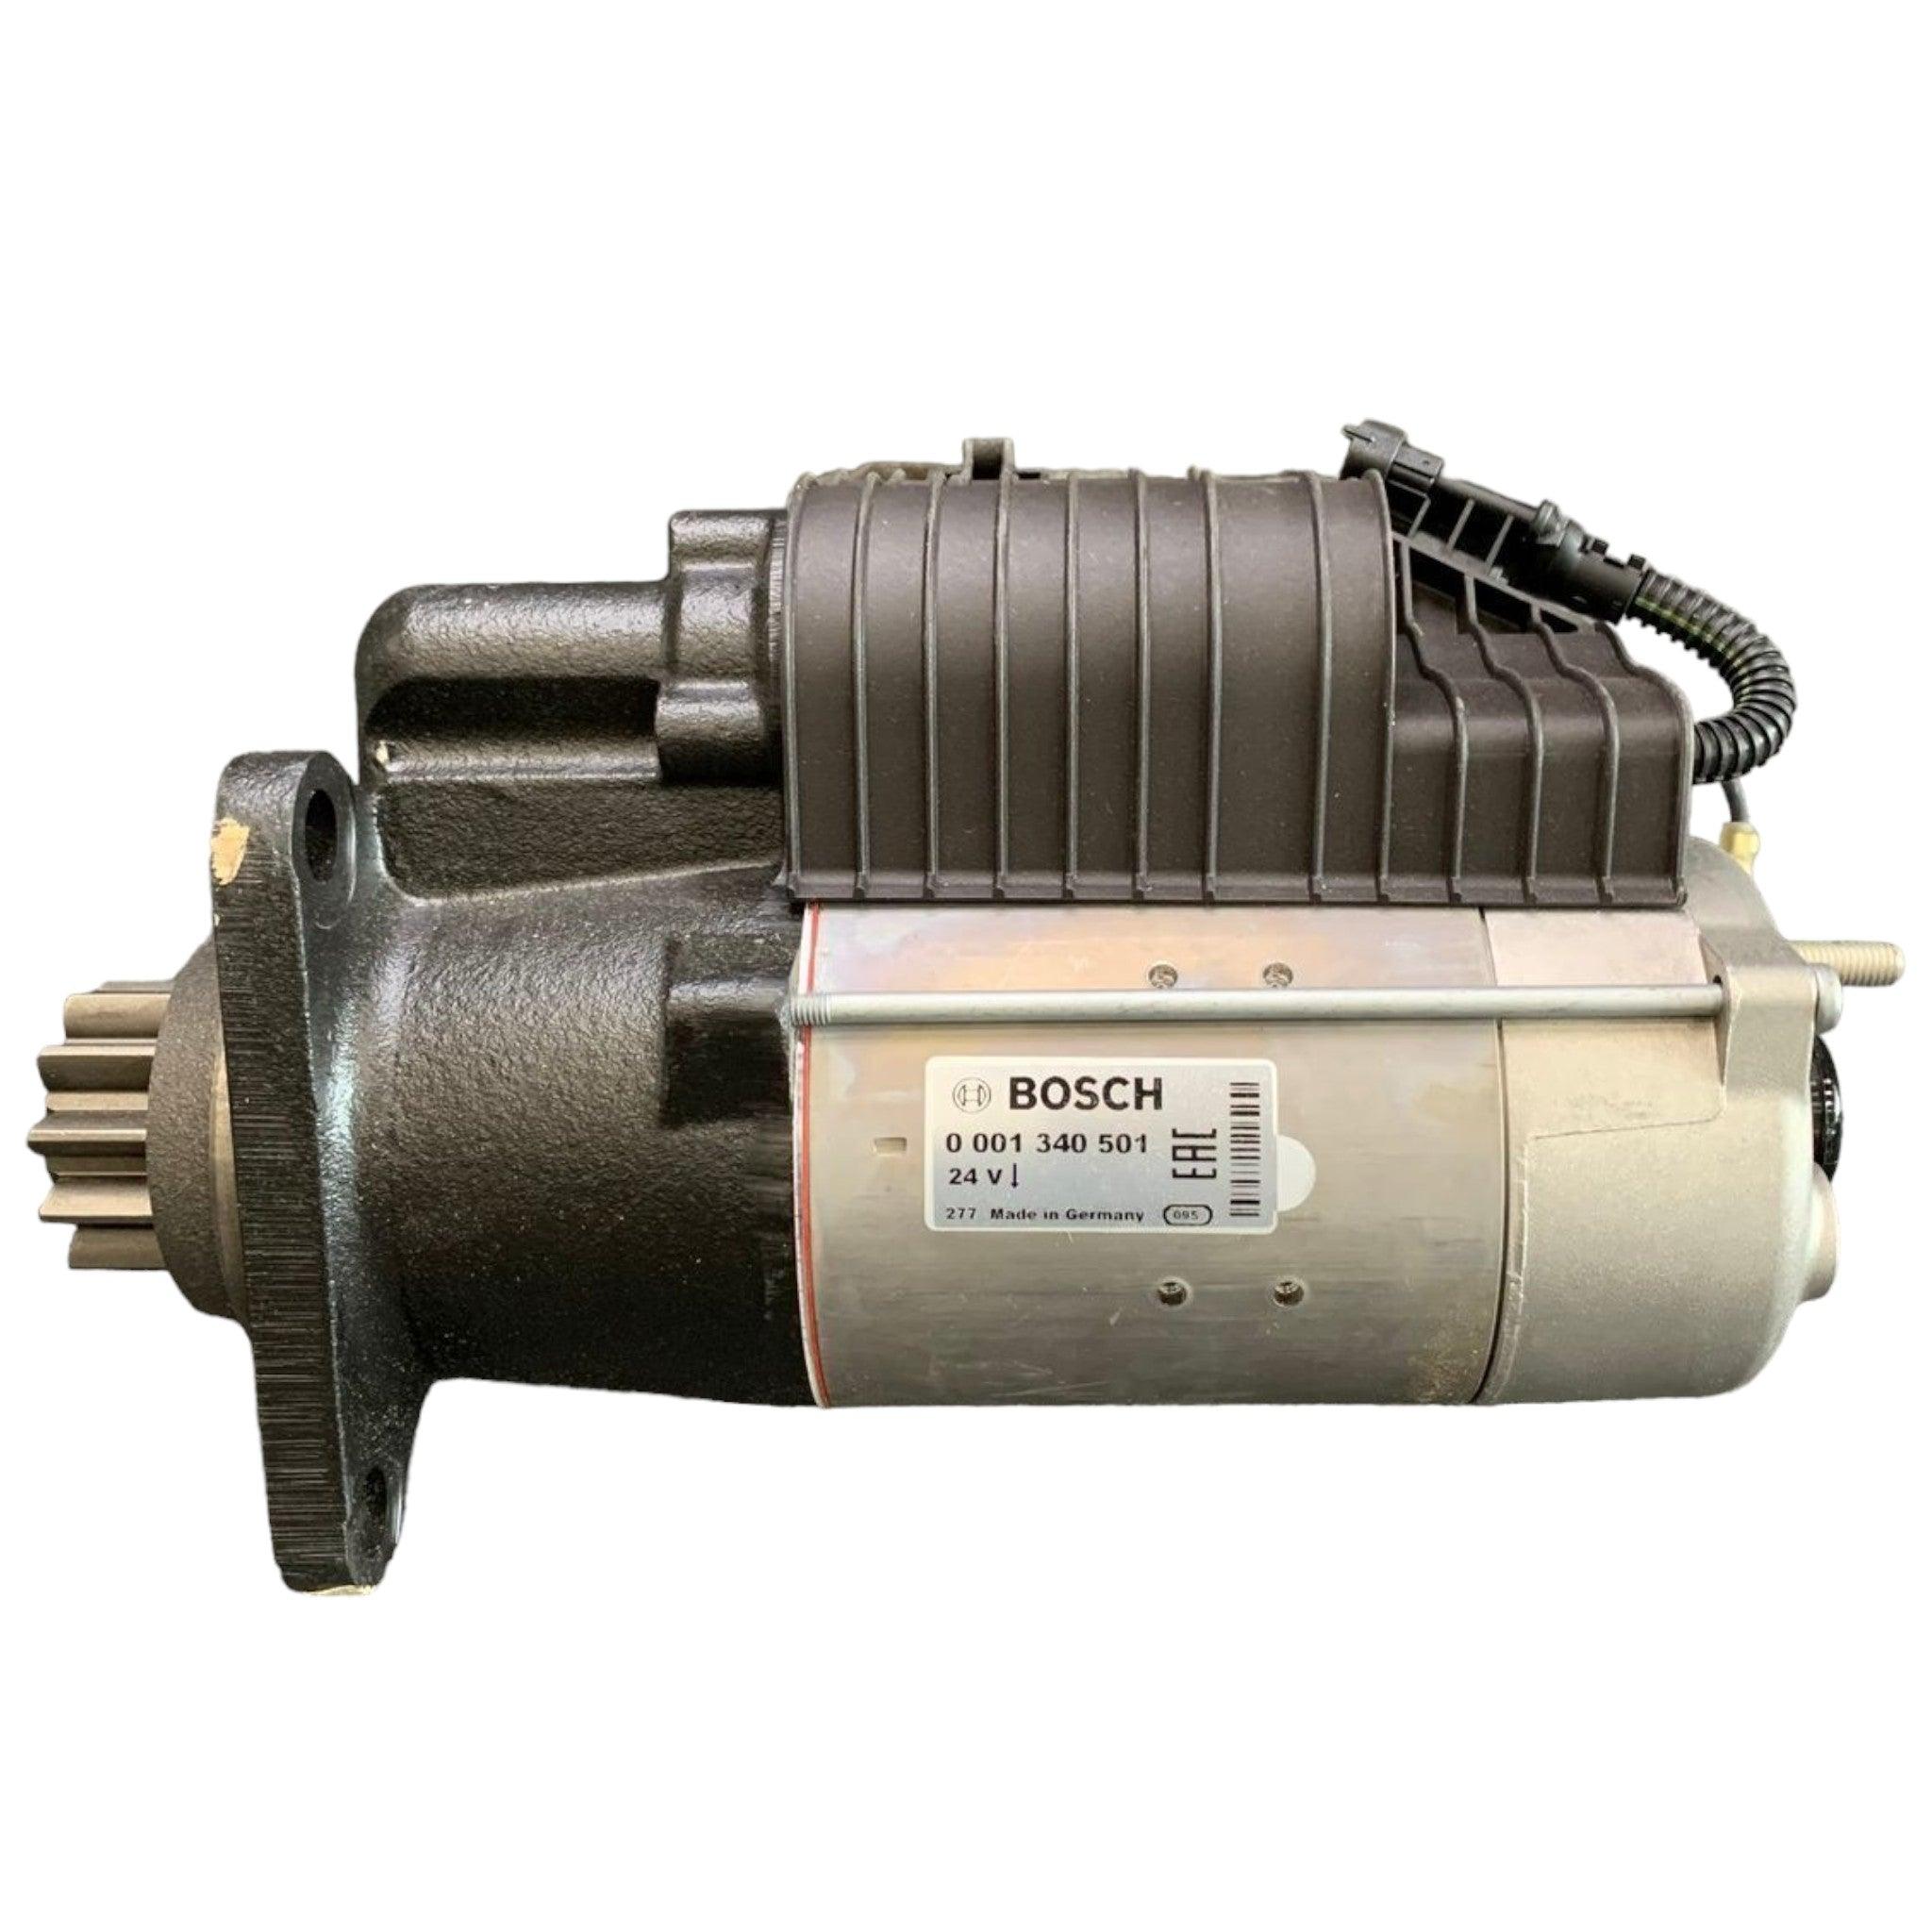 0-001-340-501 Genuine Bosch Starter Motor 24V - ADVANCED TRUCK PARTS